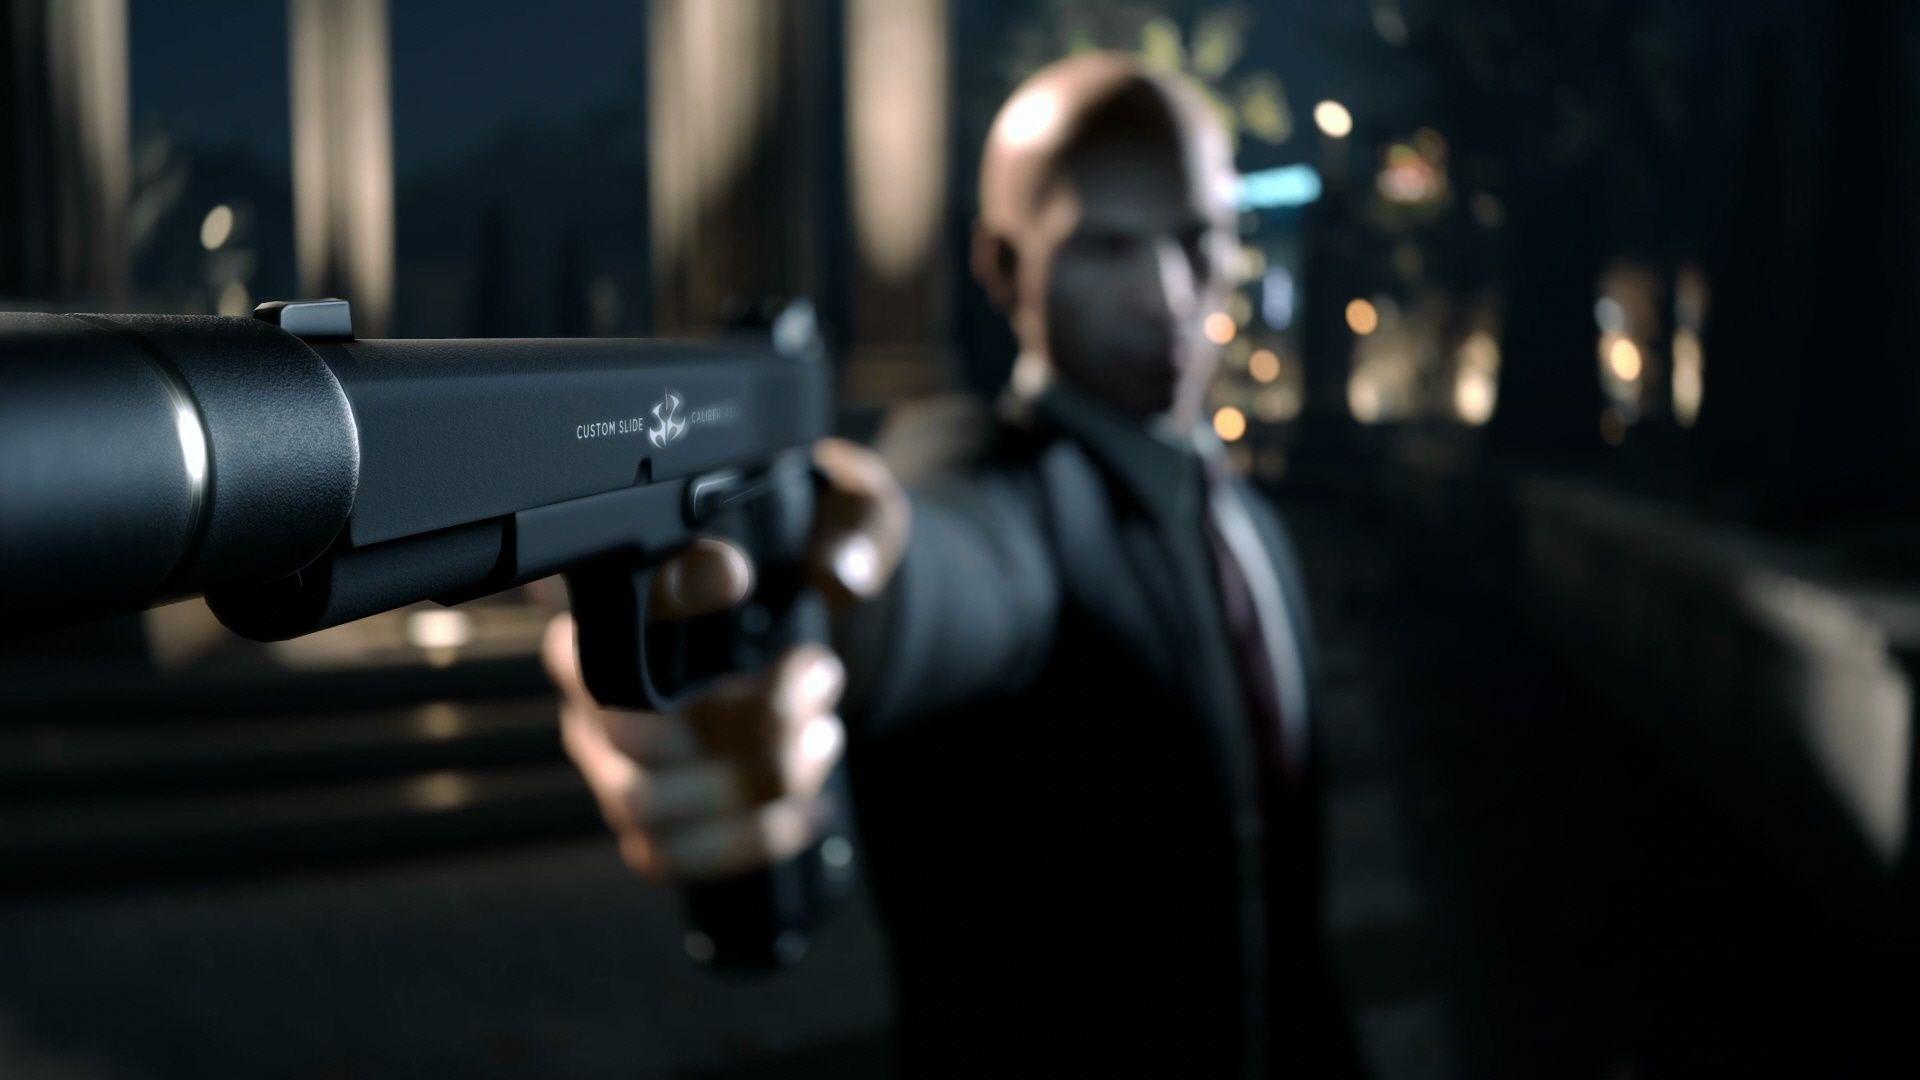 Hitman Agent 47 Suit, HD Games, 4k Wallpaper, Image, Background